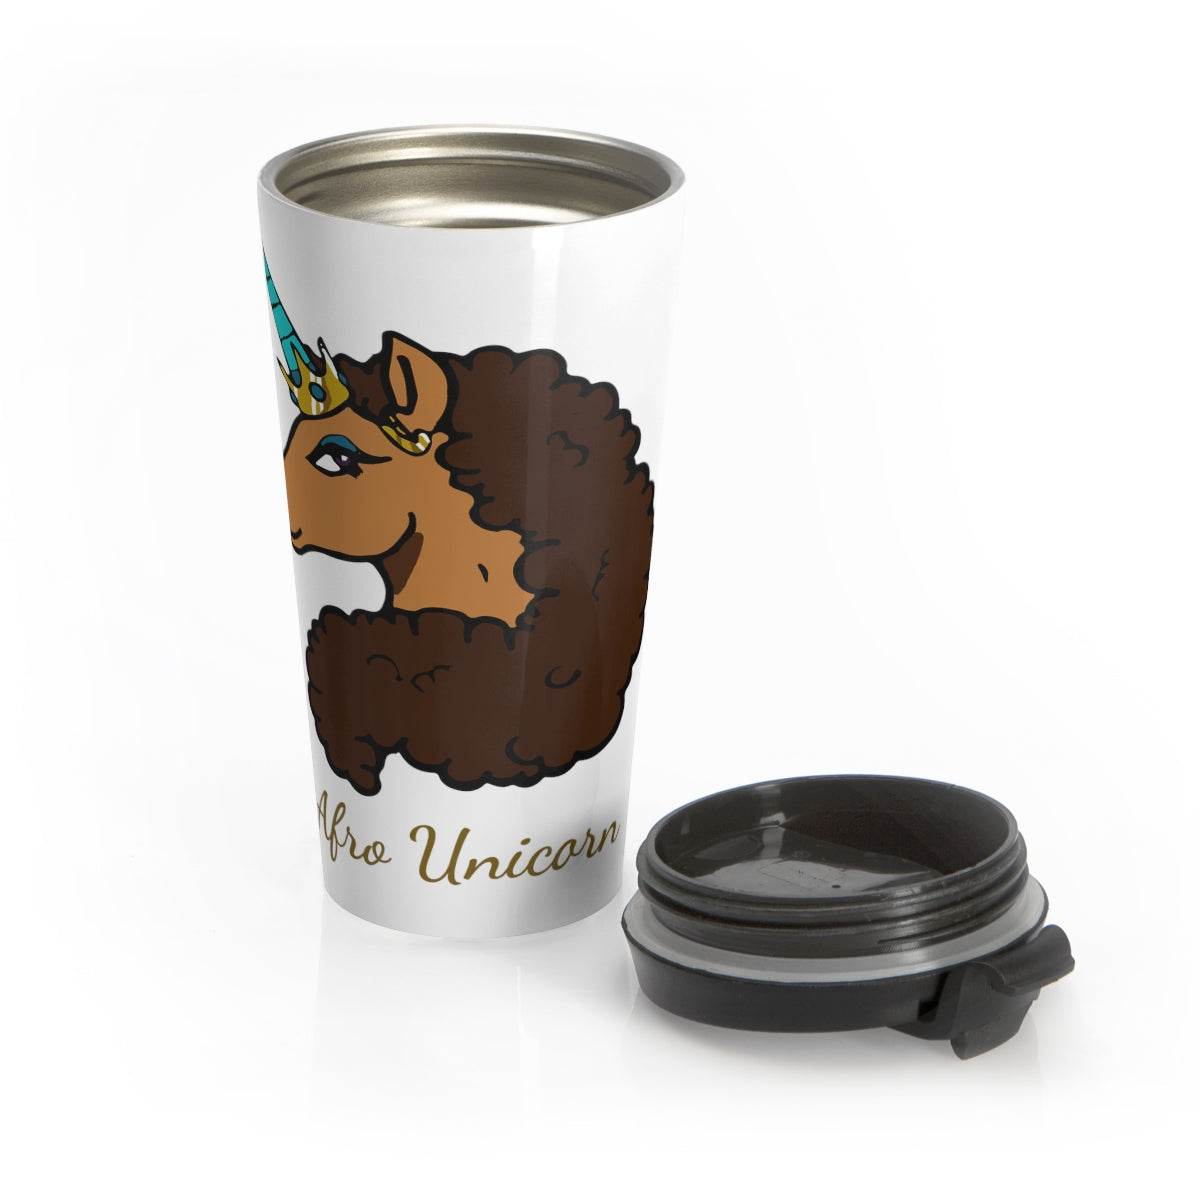 Afro Unicorn Stainless Steel Travel Mug - Vanilla- Afro Unicorn